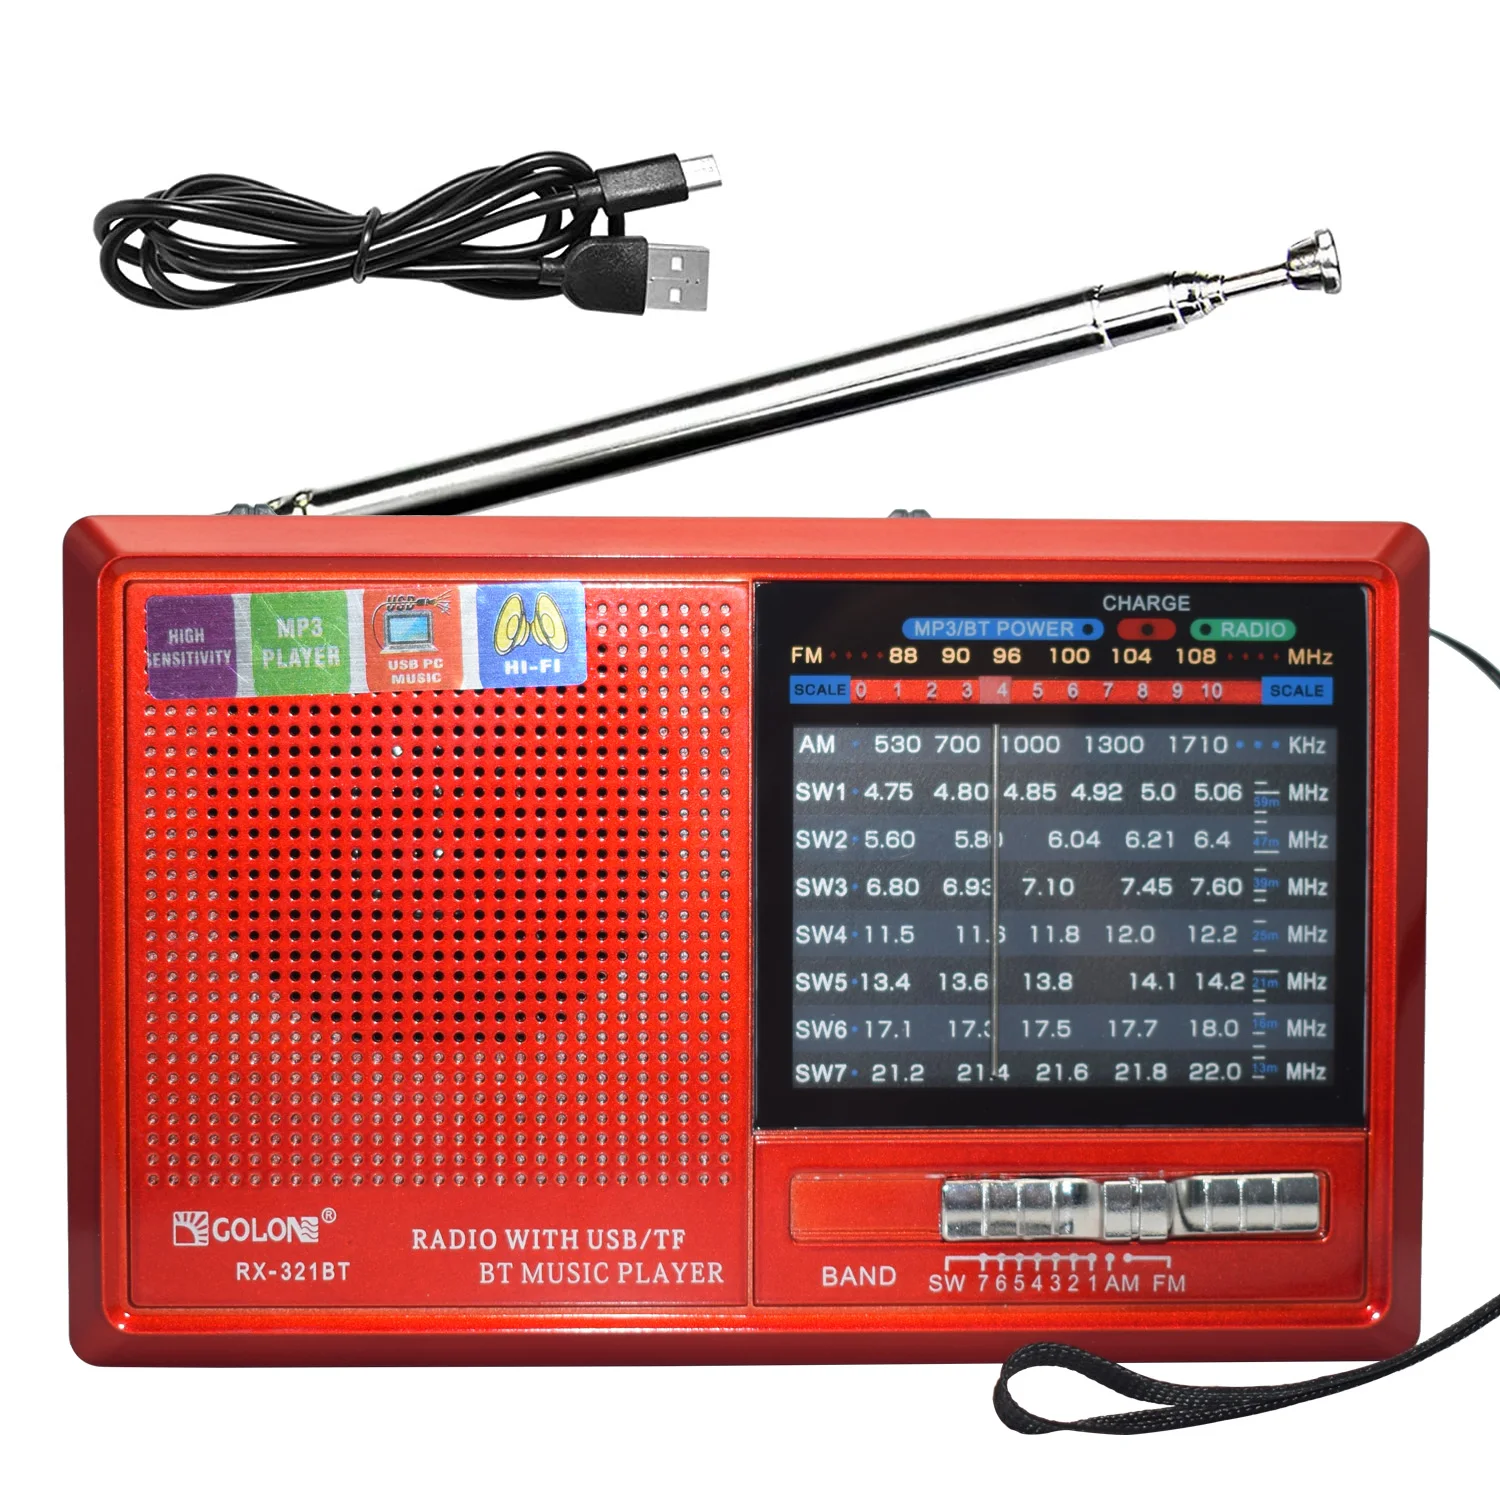 Home Shortwave Portable With USB Music Player BT USB TF PC Link Radio